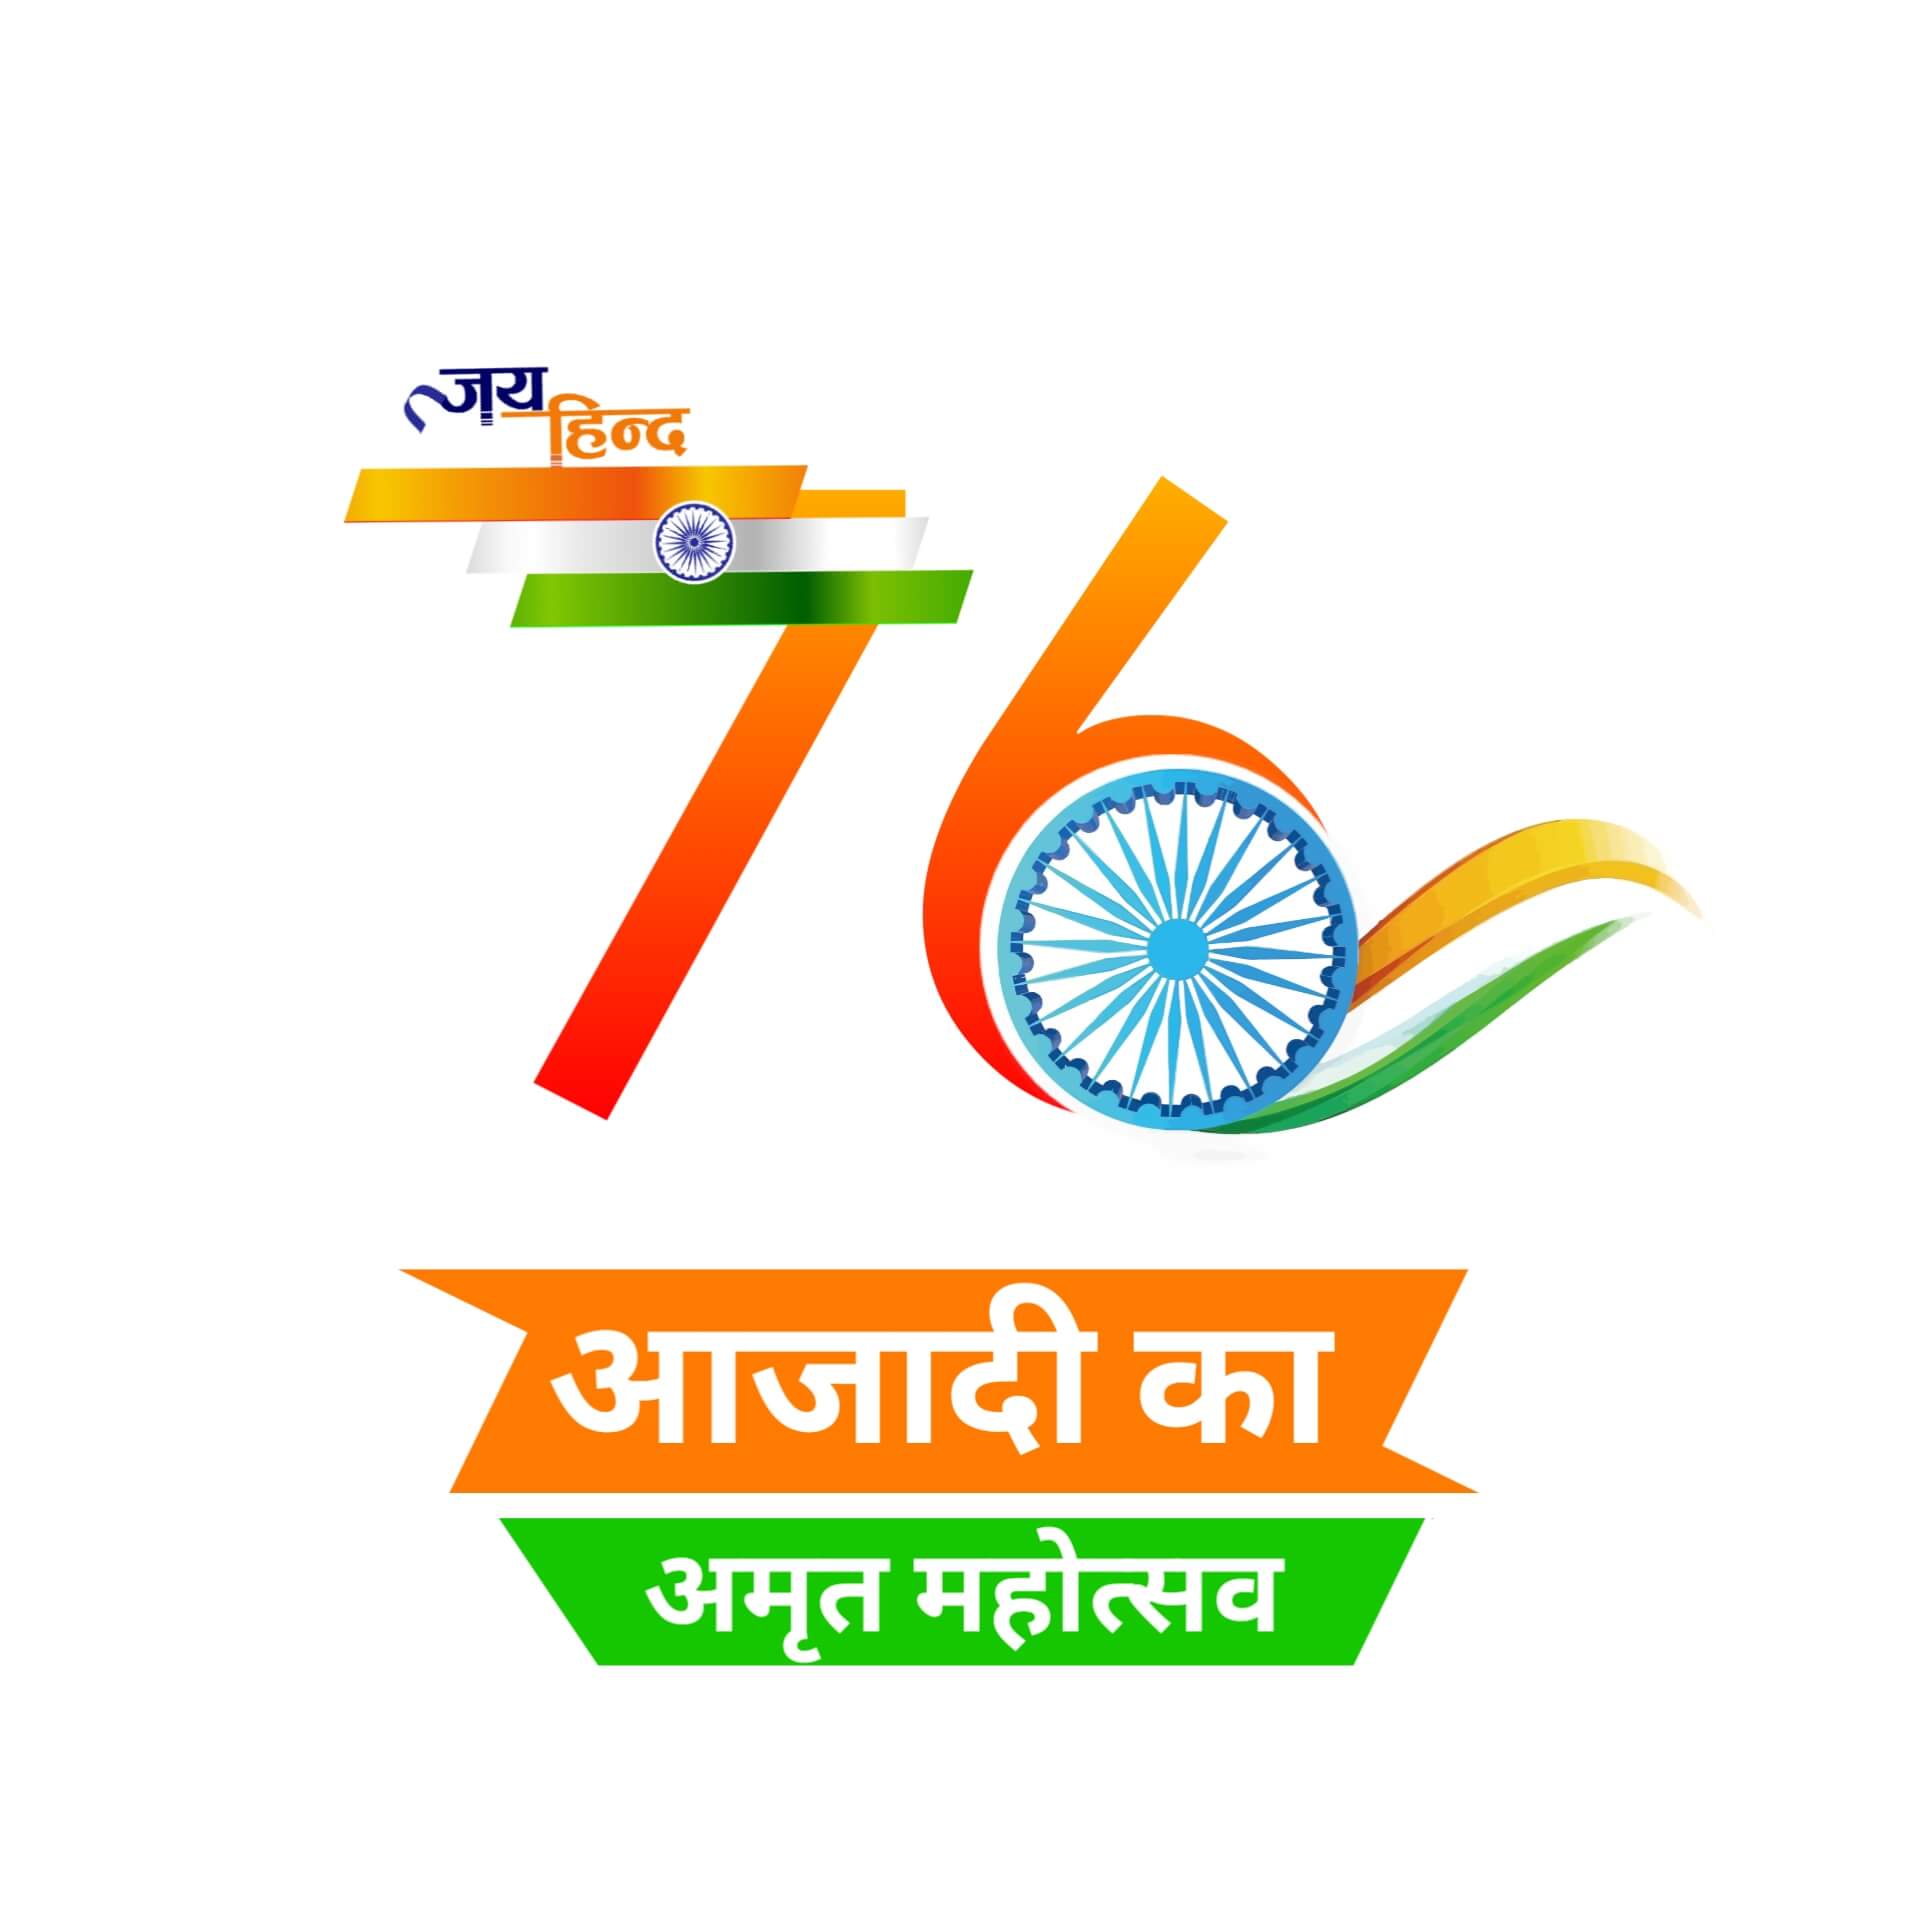 Hindi Independence Day Image